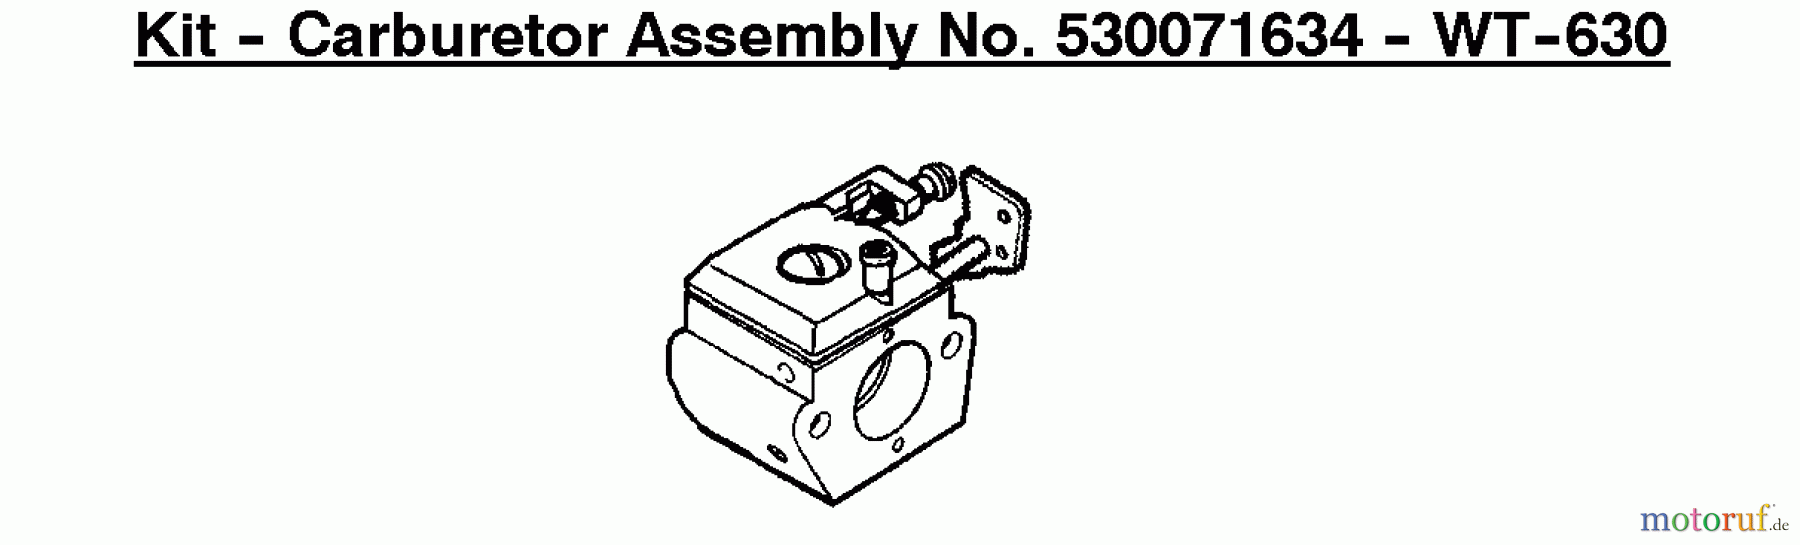  Poulan / Weed Eater Kantenschneider PE550 (Type 3) - Weed Eater Edger Kit - Carburetor Assembly